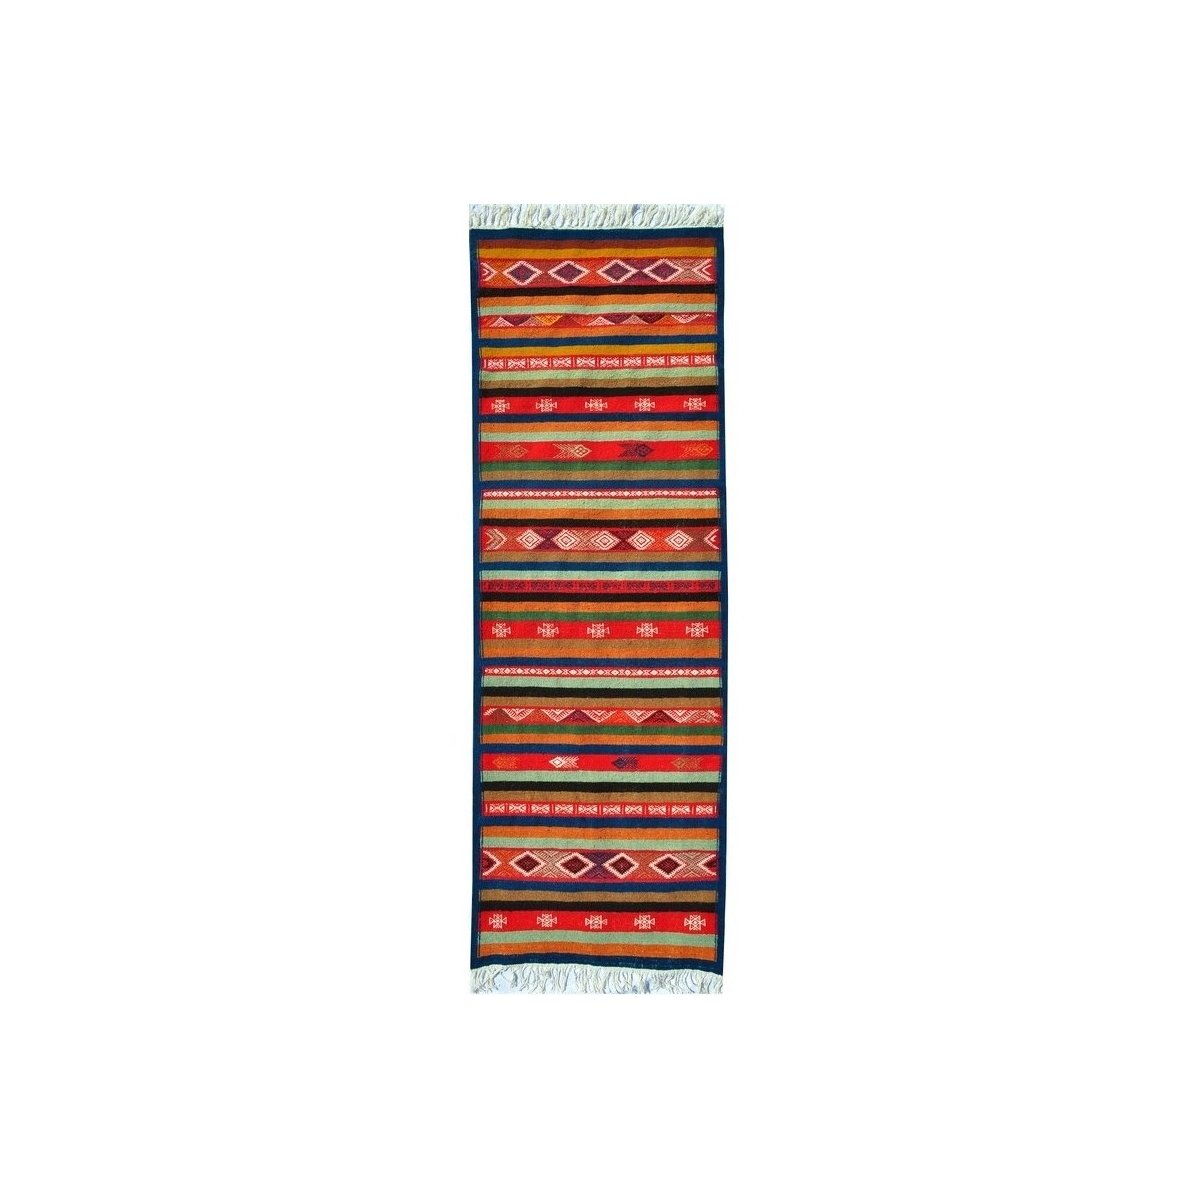 Tapete berbere Tapete Kilim longo Foudha 65x200 Multicor (Tecidos à mão, Lã) Tapete tunisiano kilim, estilo marroquino. Tapete r